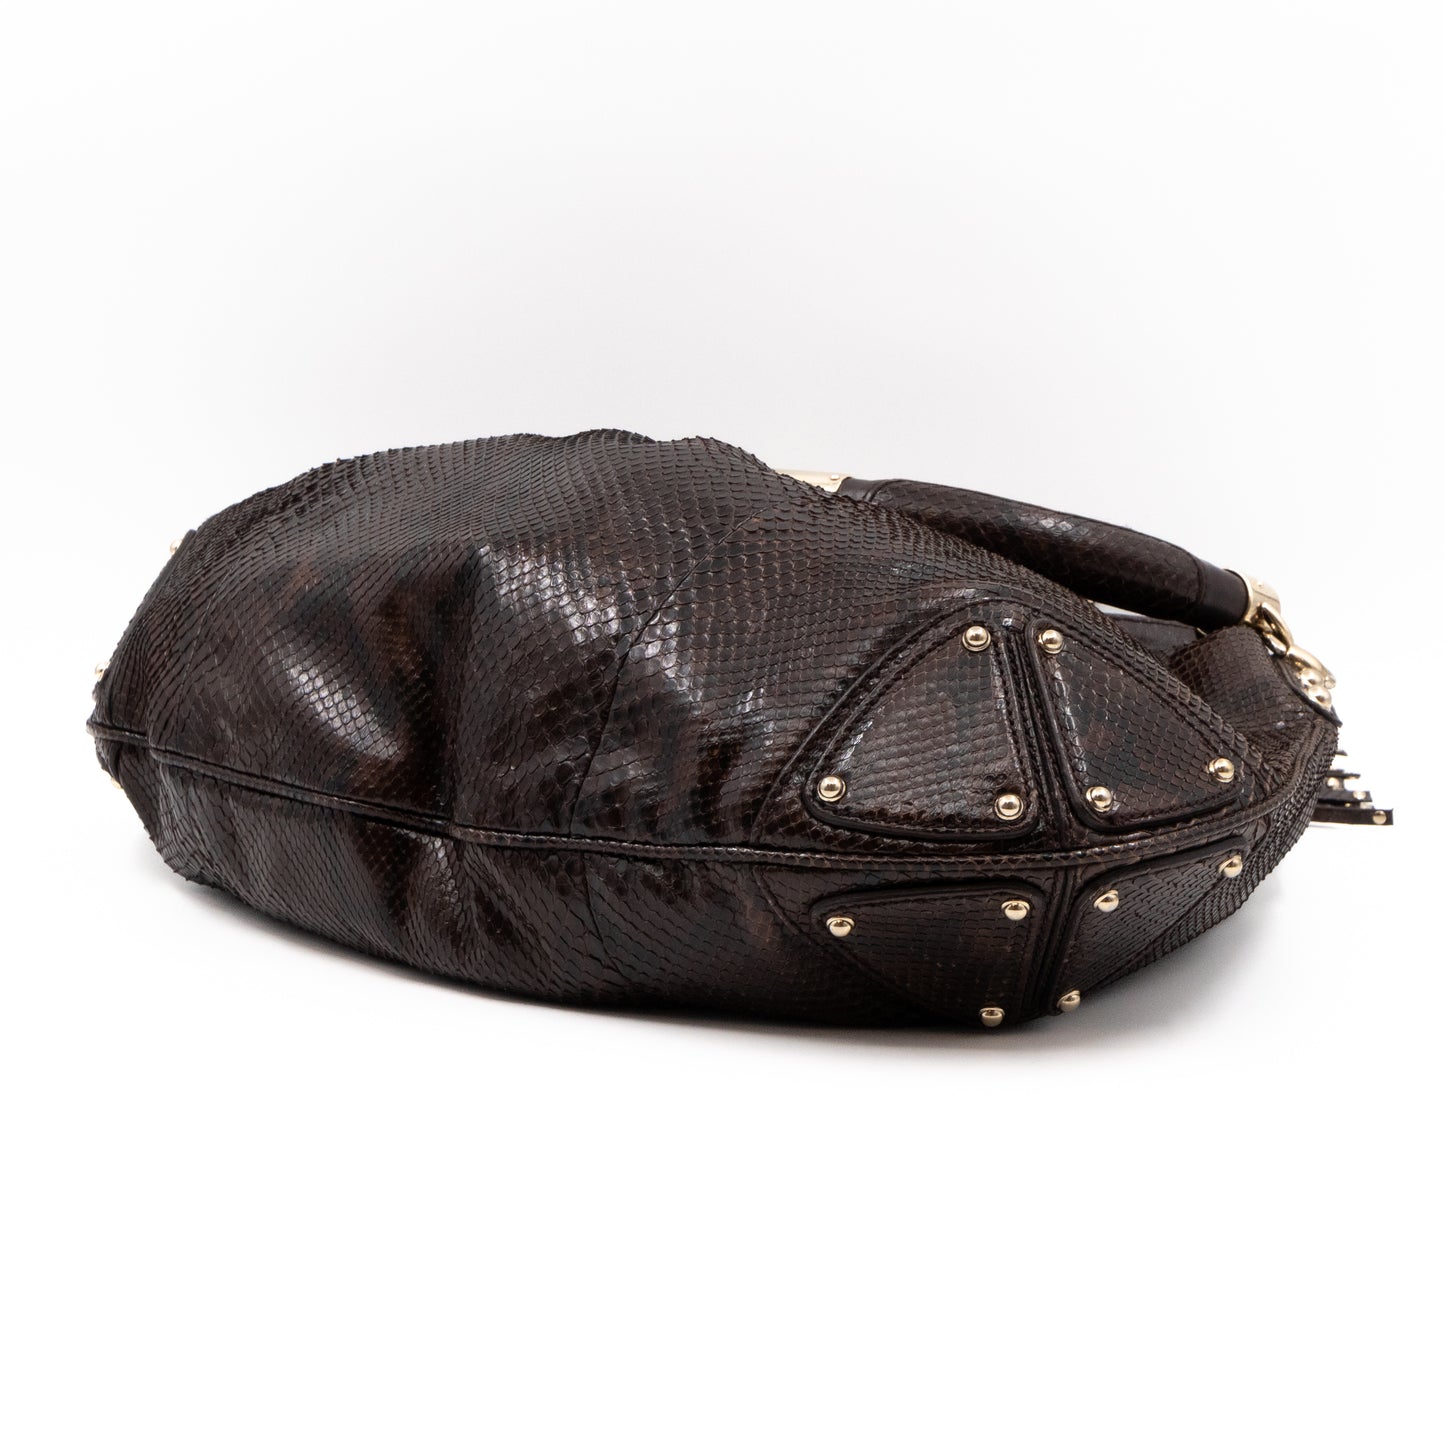 Indy Top Handle Bag Brown Python Leather